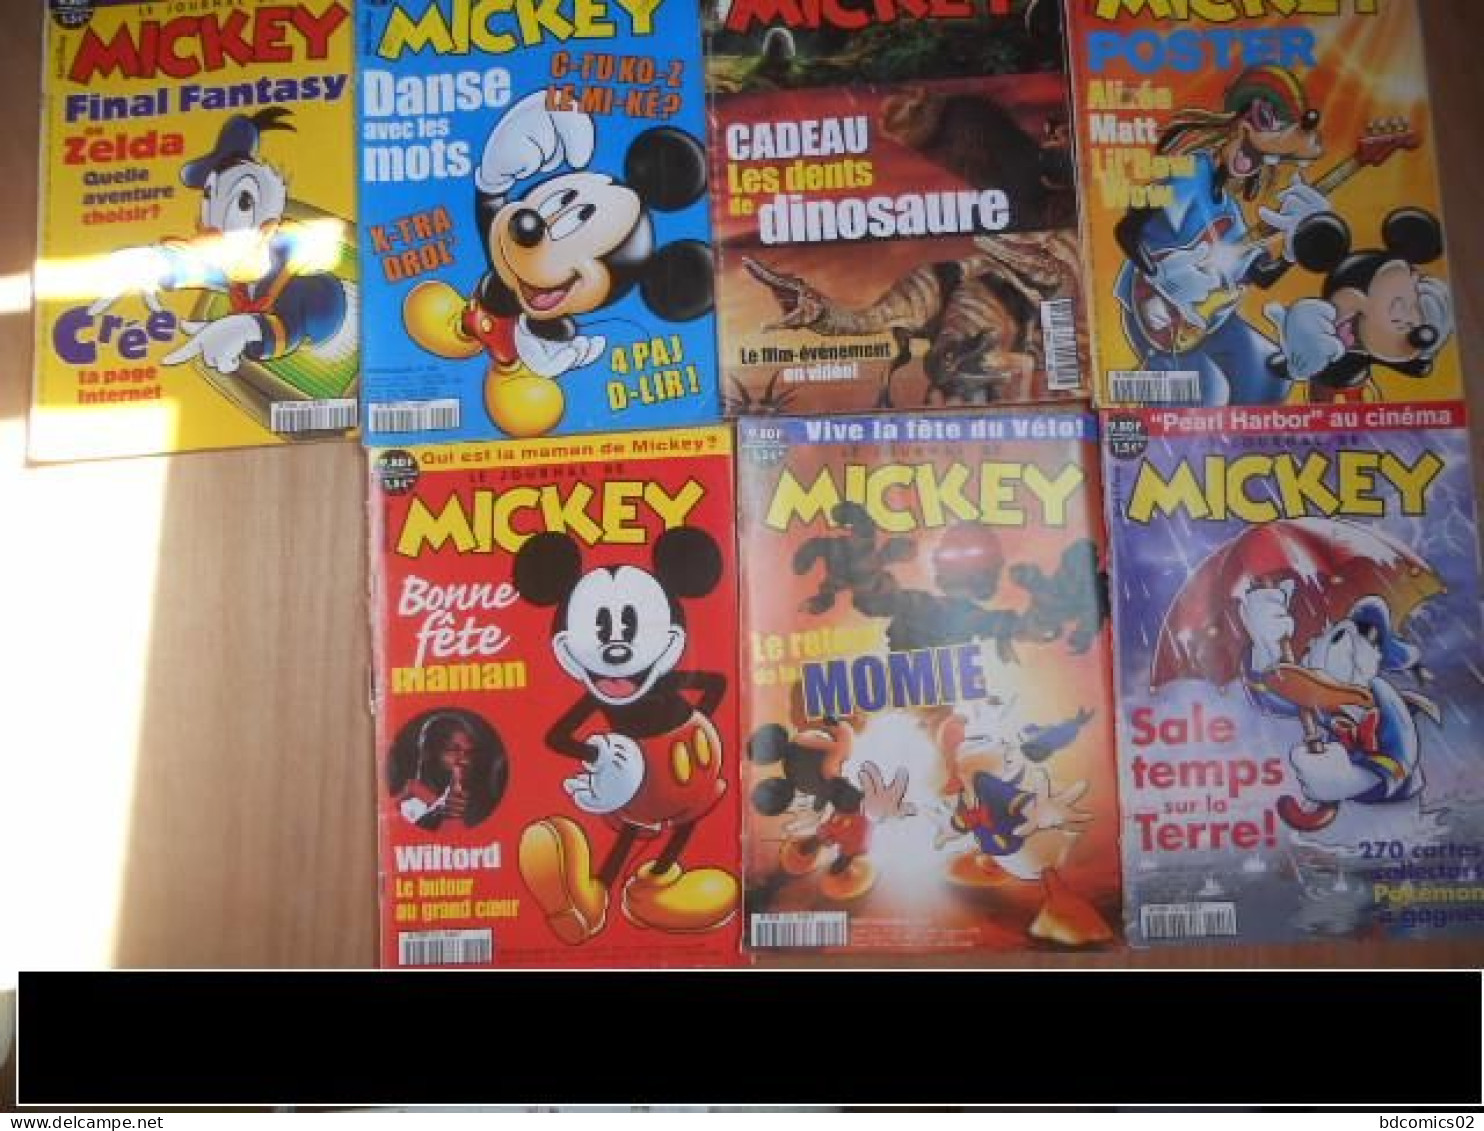 Le Journal De Mickey   LOT DE 7 BD N°2550/ 2551 /2552/ 2553 / 2554/ 2555 /2556/ LOT N°13 - Lots De Plusieurs BD